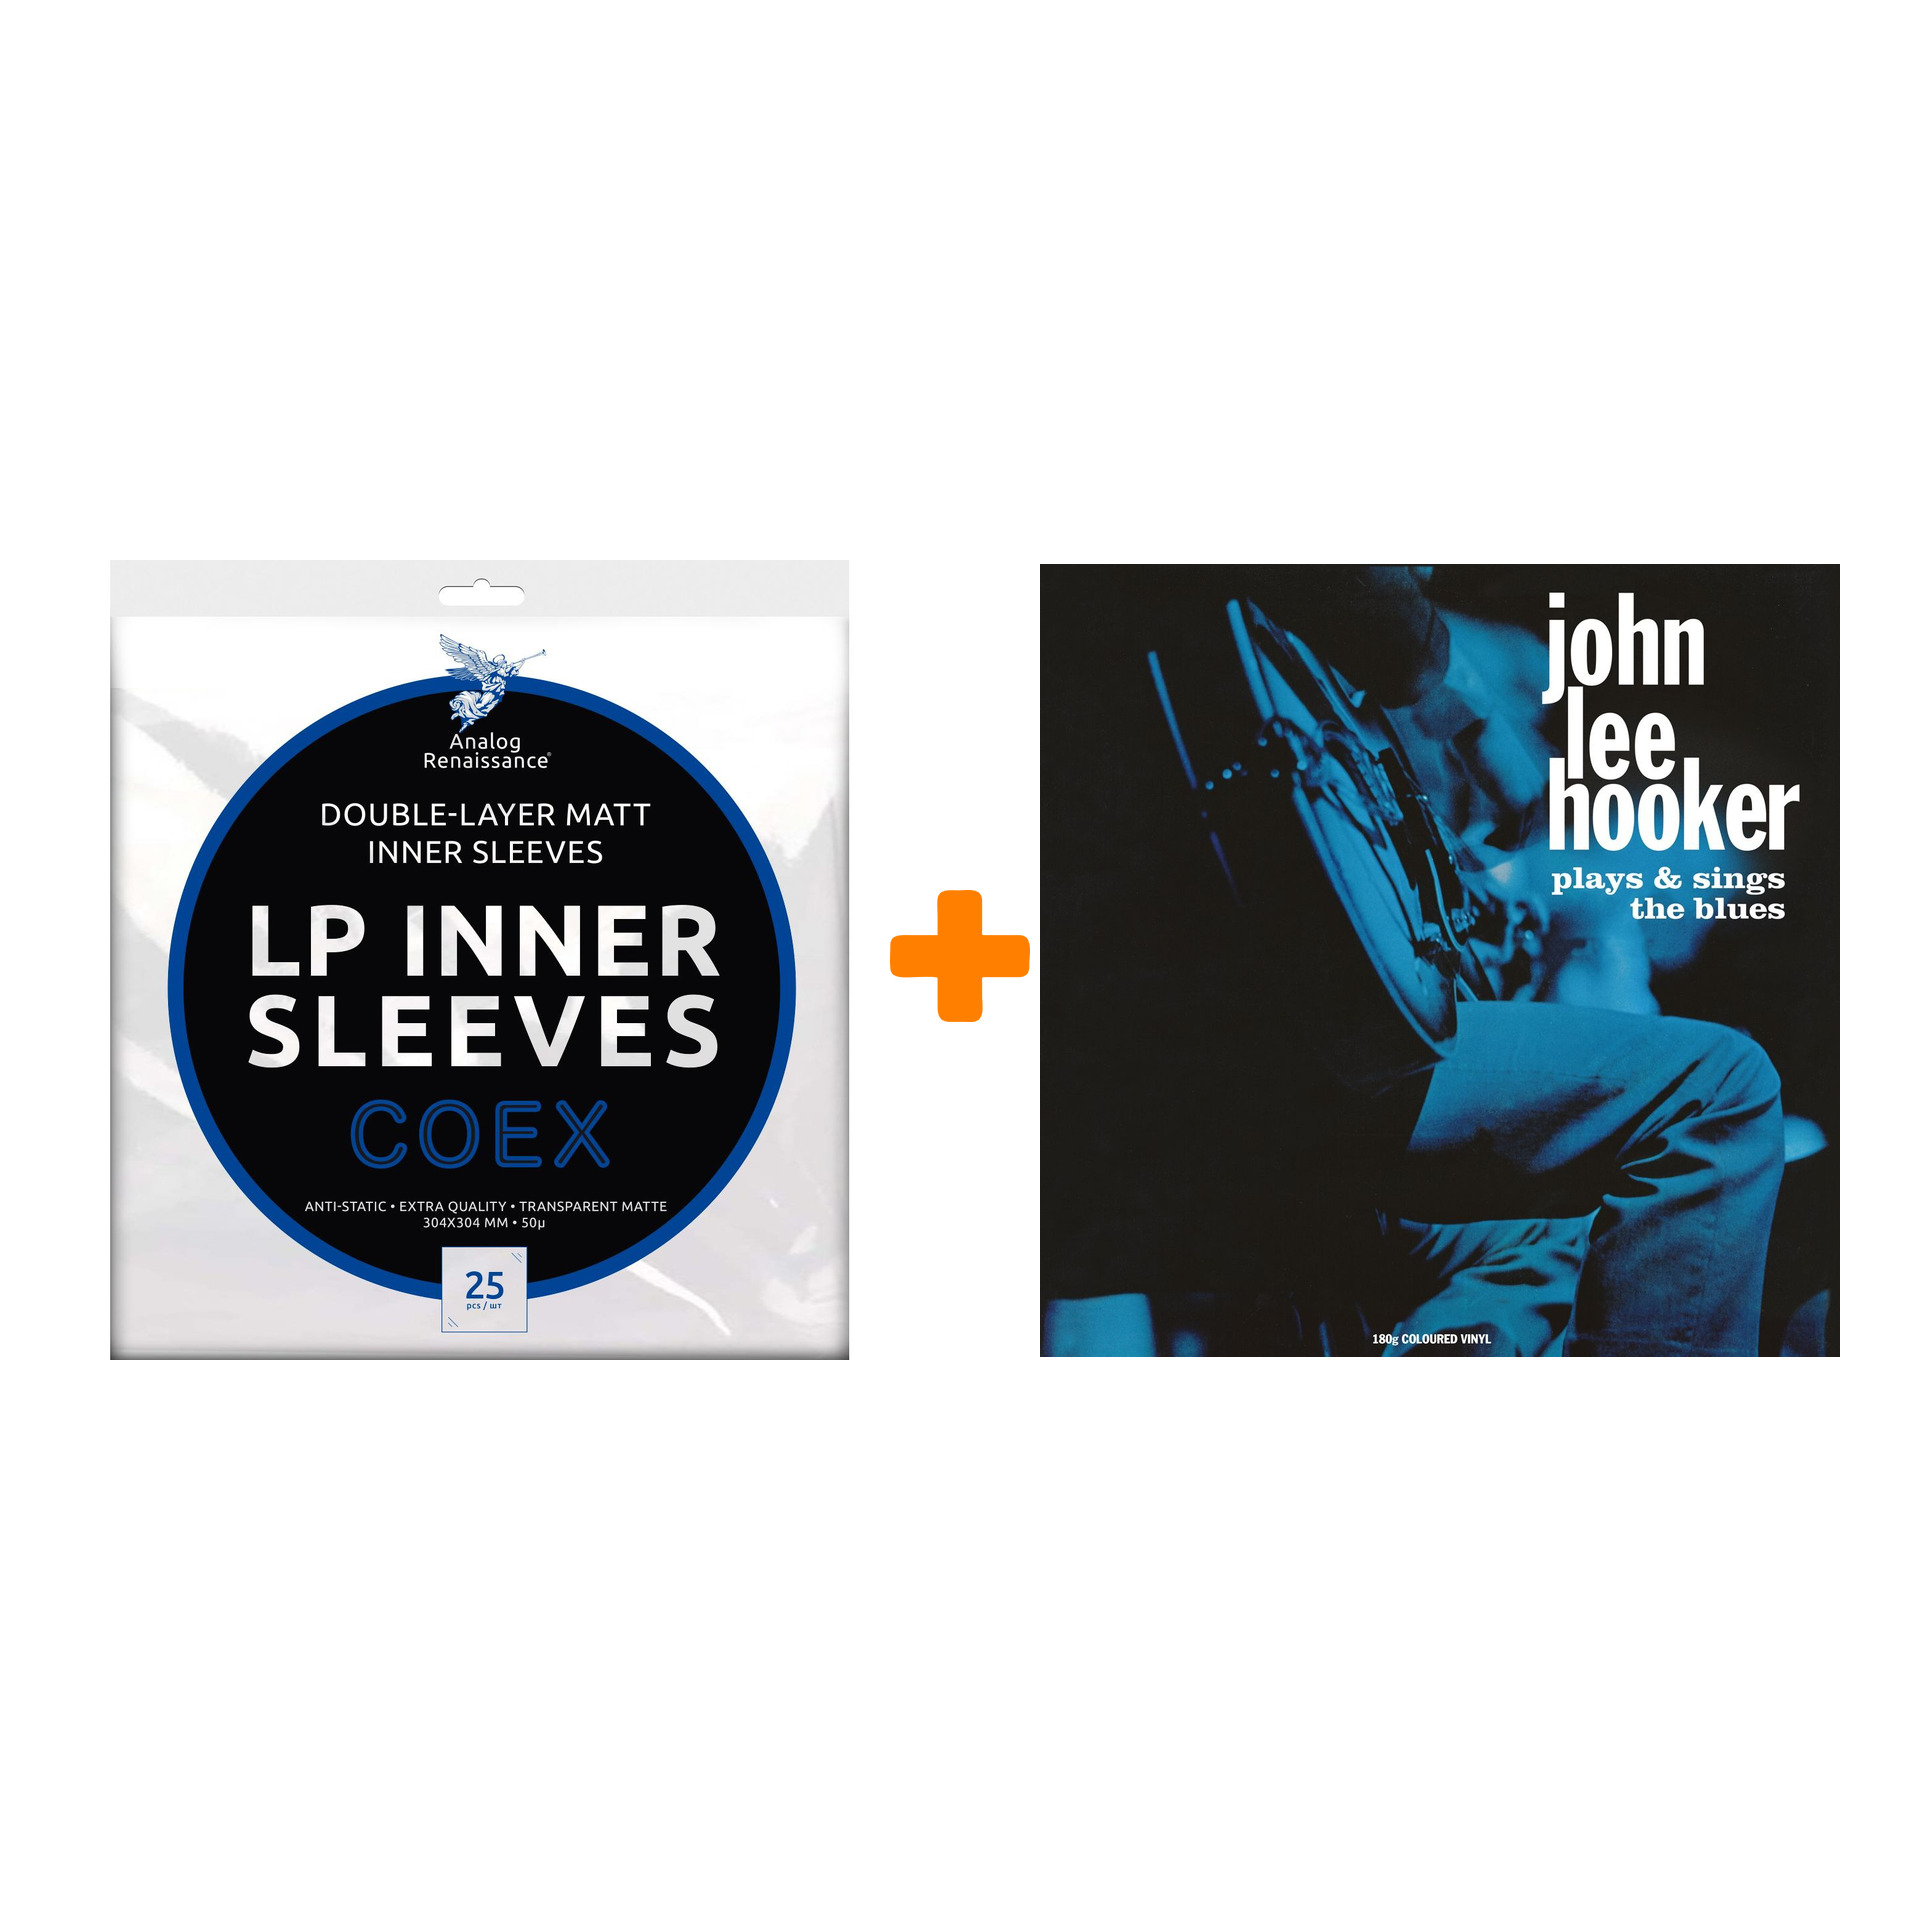 HOOKER JOHN LEE Plays & Sings The Blues Coloured Purple Vinyl LP + Конверты внутренние COEX для грампластинок 12 25шт Набор